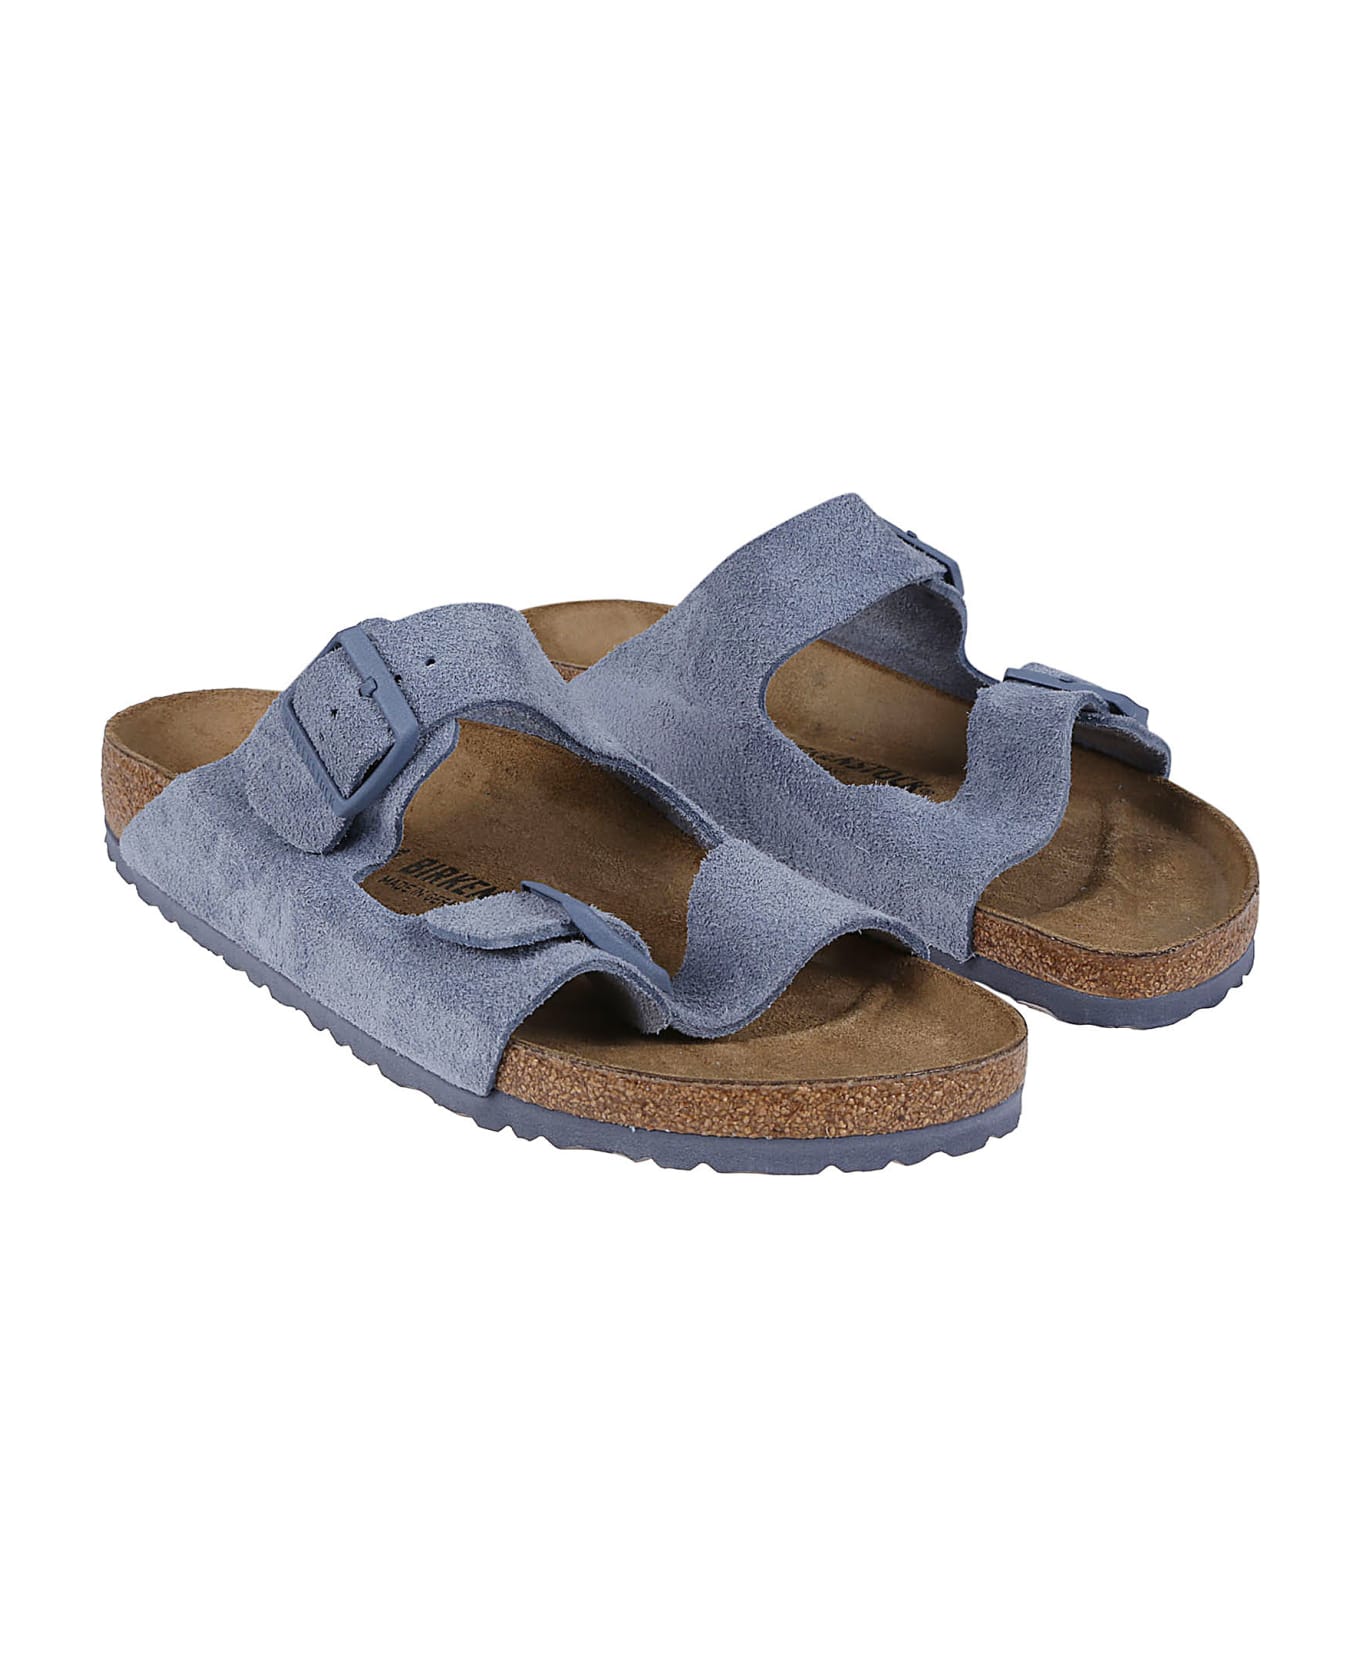 Birkenstock Arizona Sandals - Elemental Blue その他各種シューズ